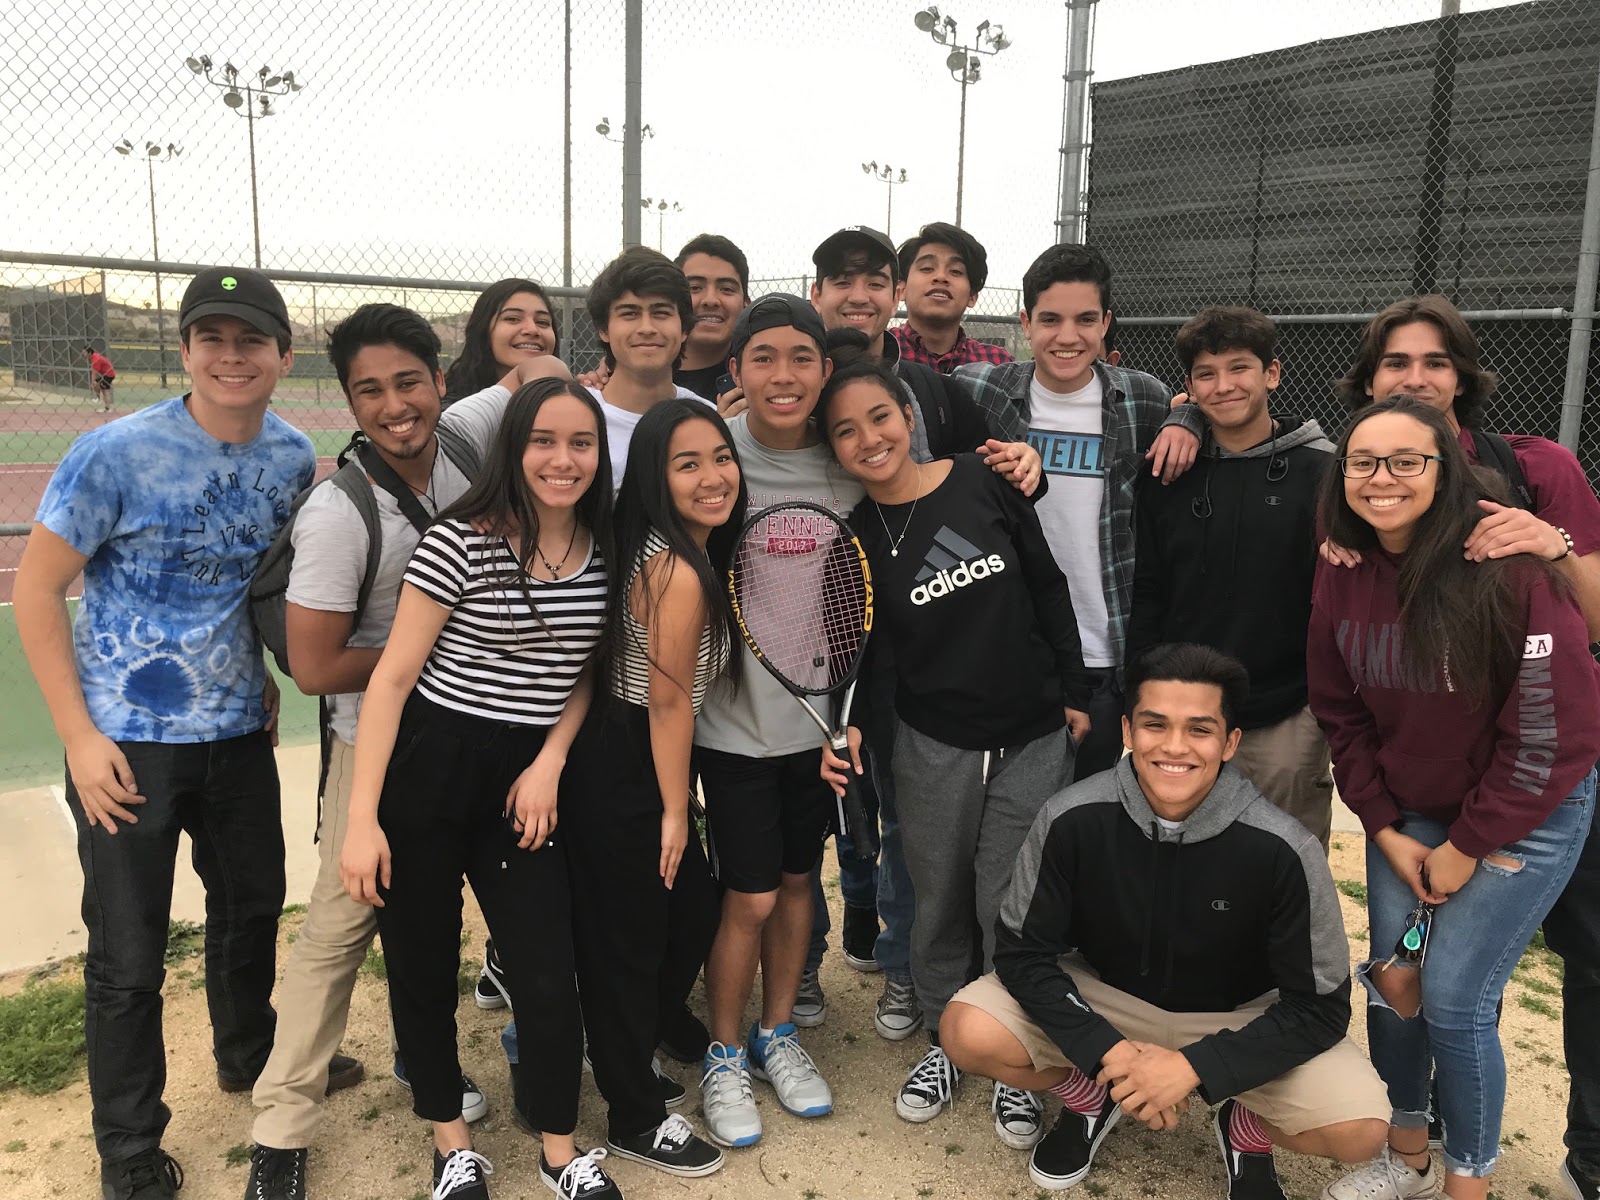 The South El Monte High School Academic Decathlon Team – Eagles Nest